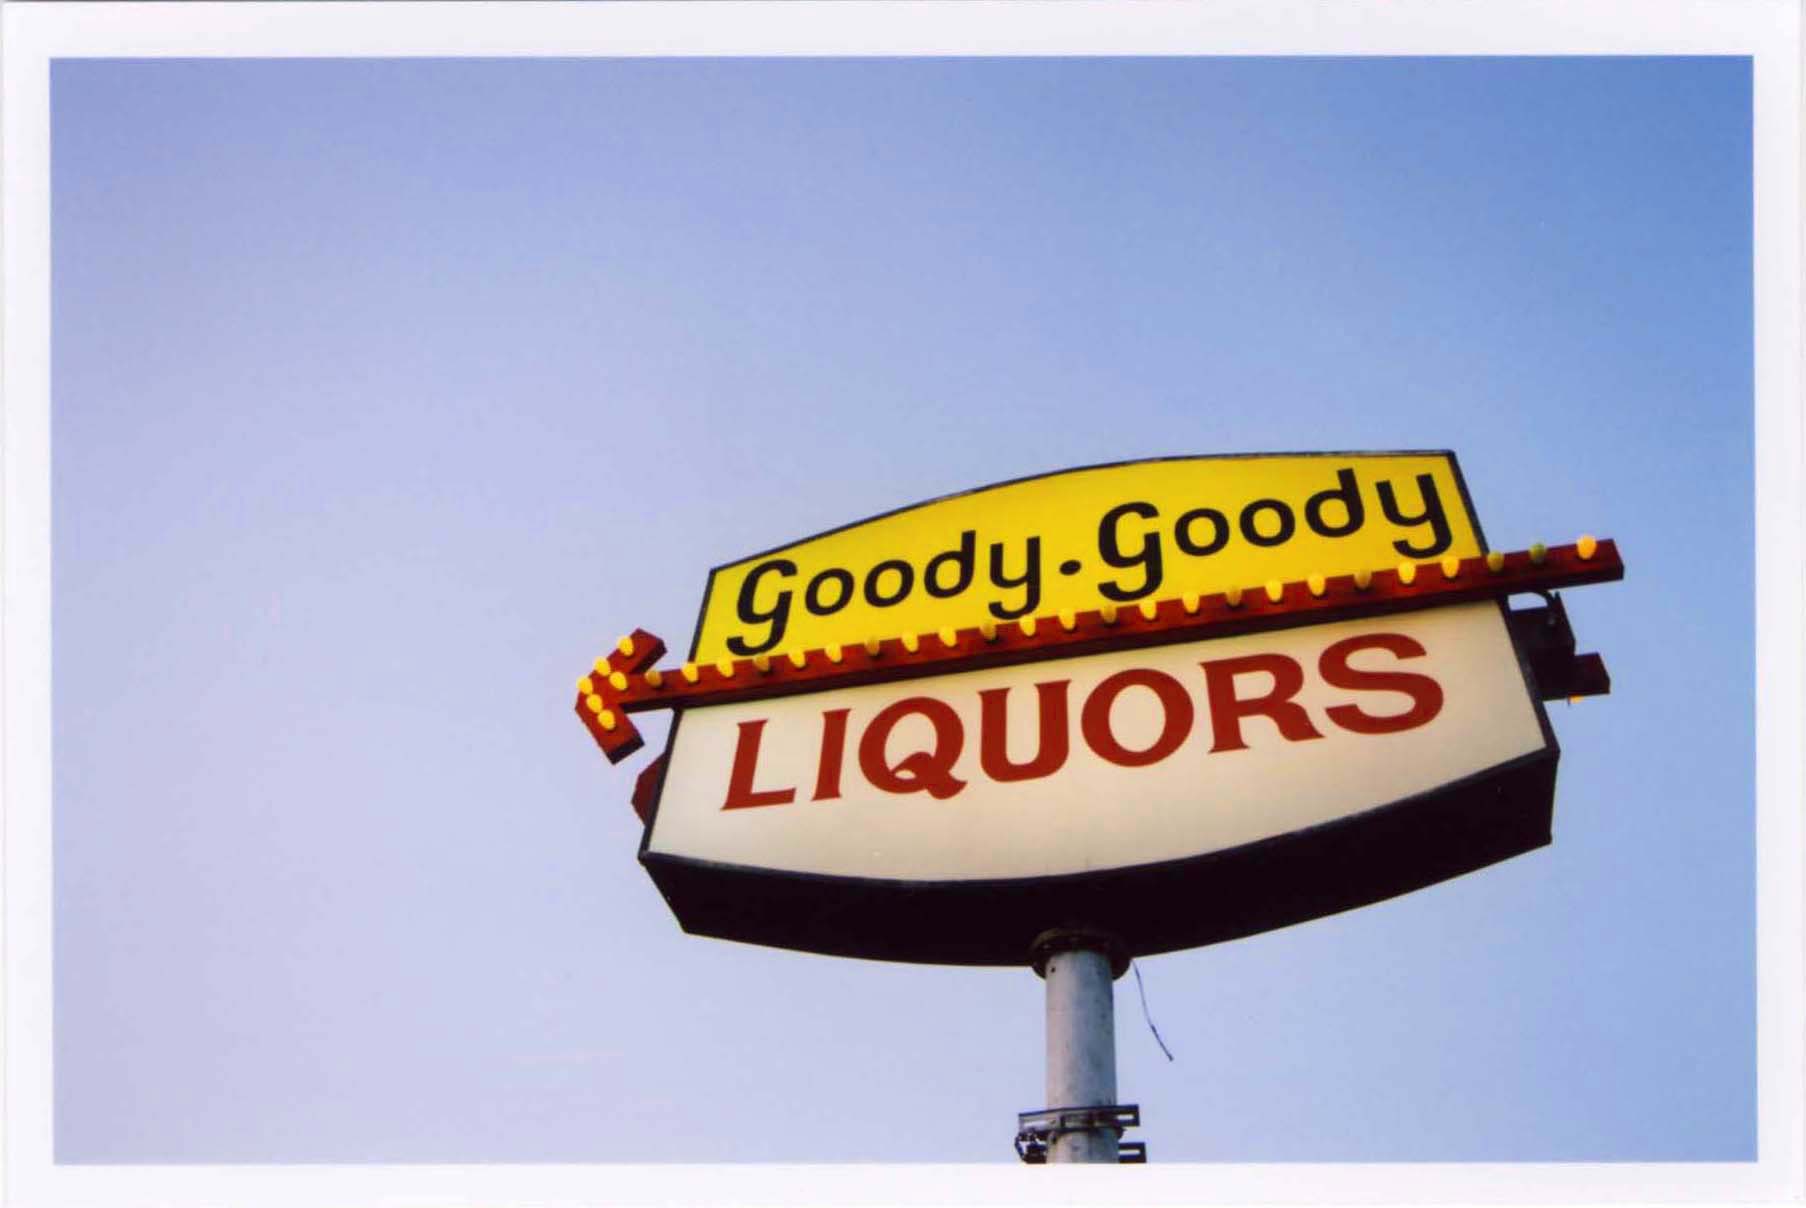 goody goody liquors.jpg